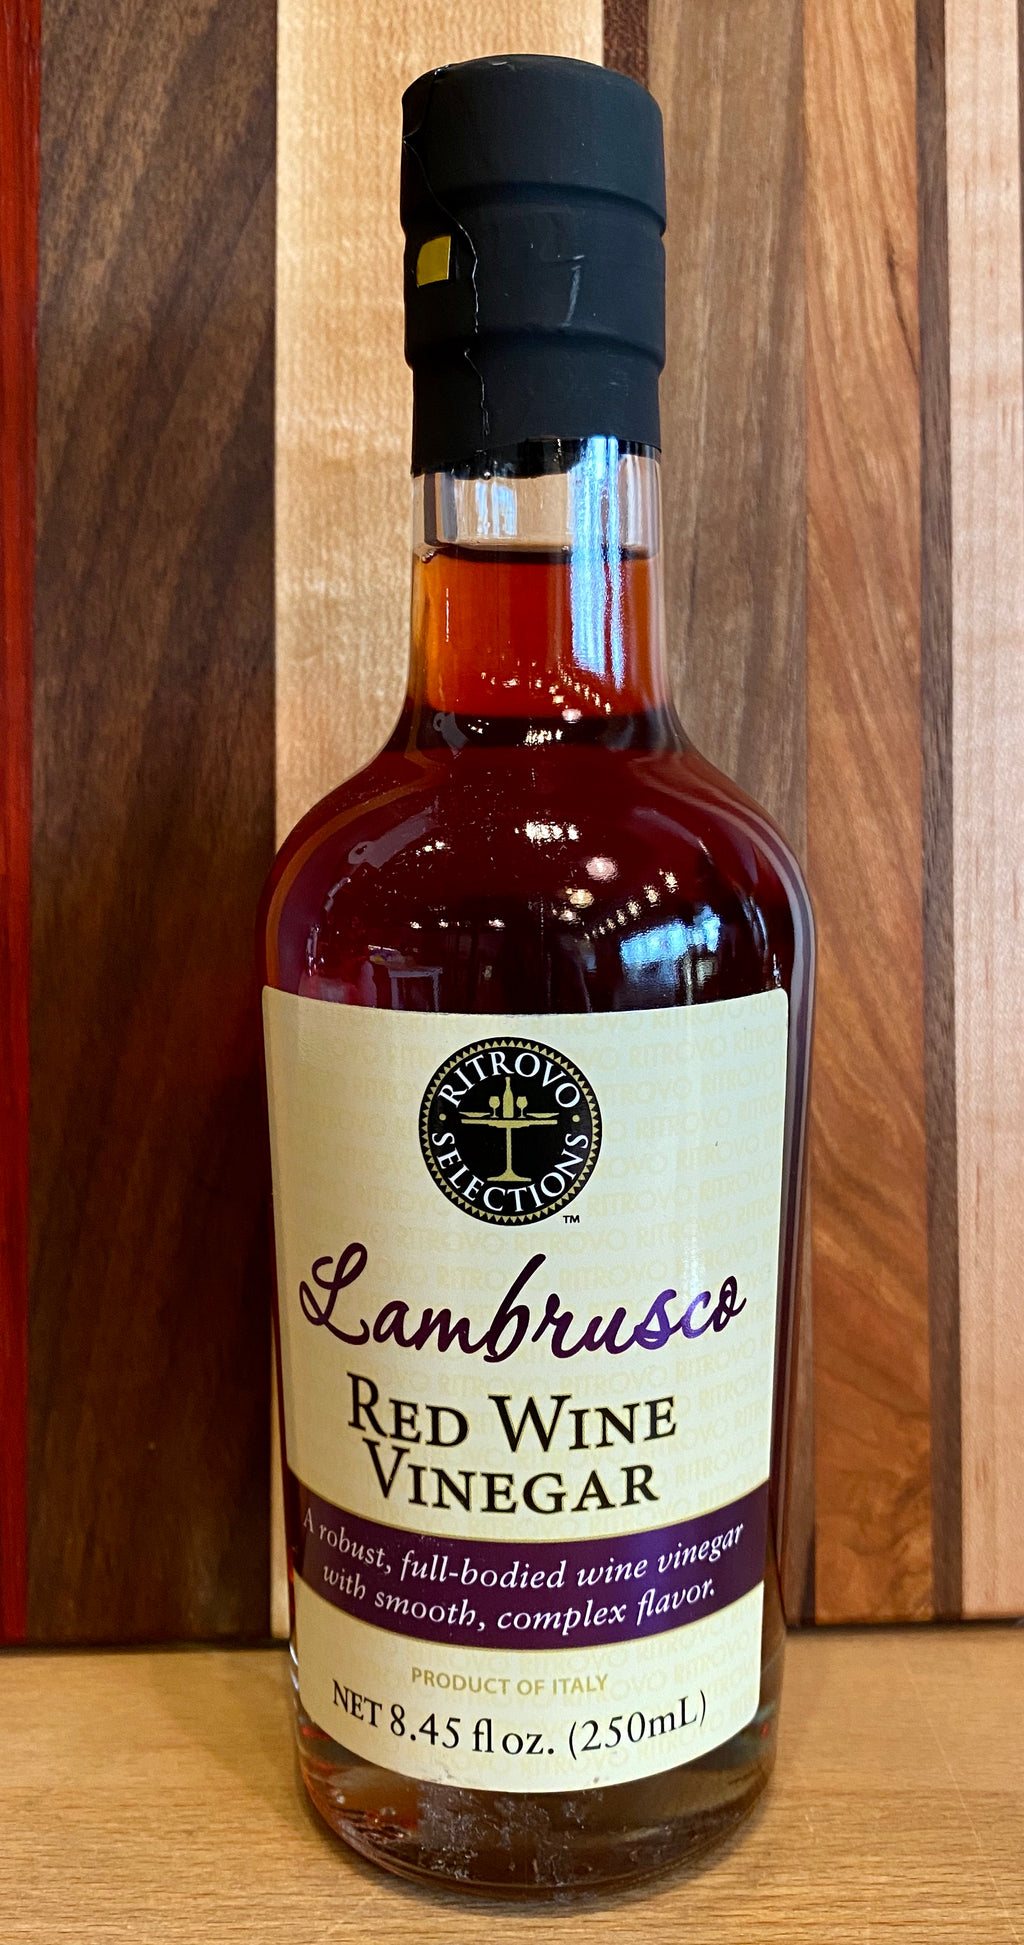 Lambrusco Red Wine Vinegar